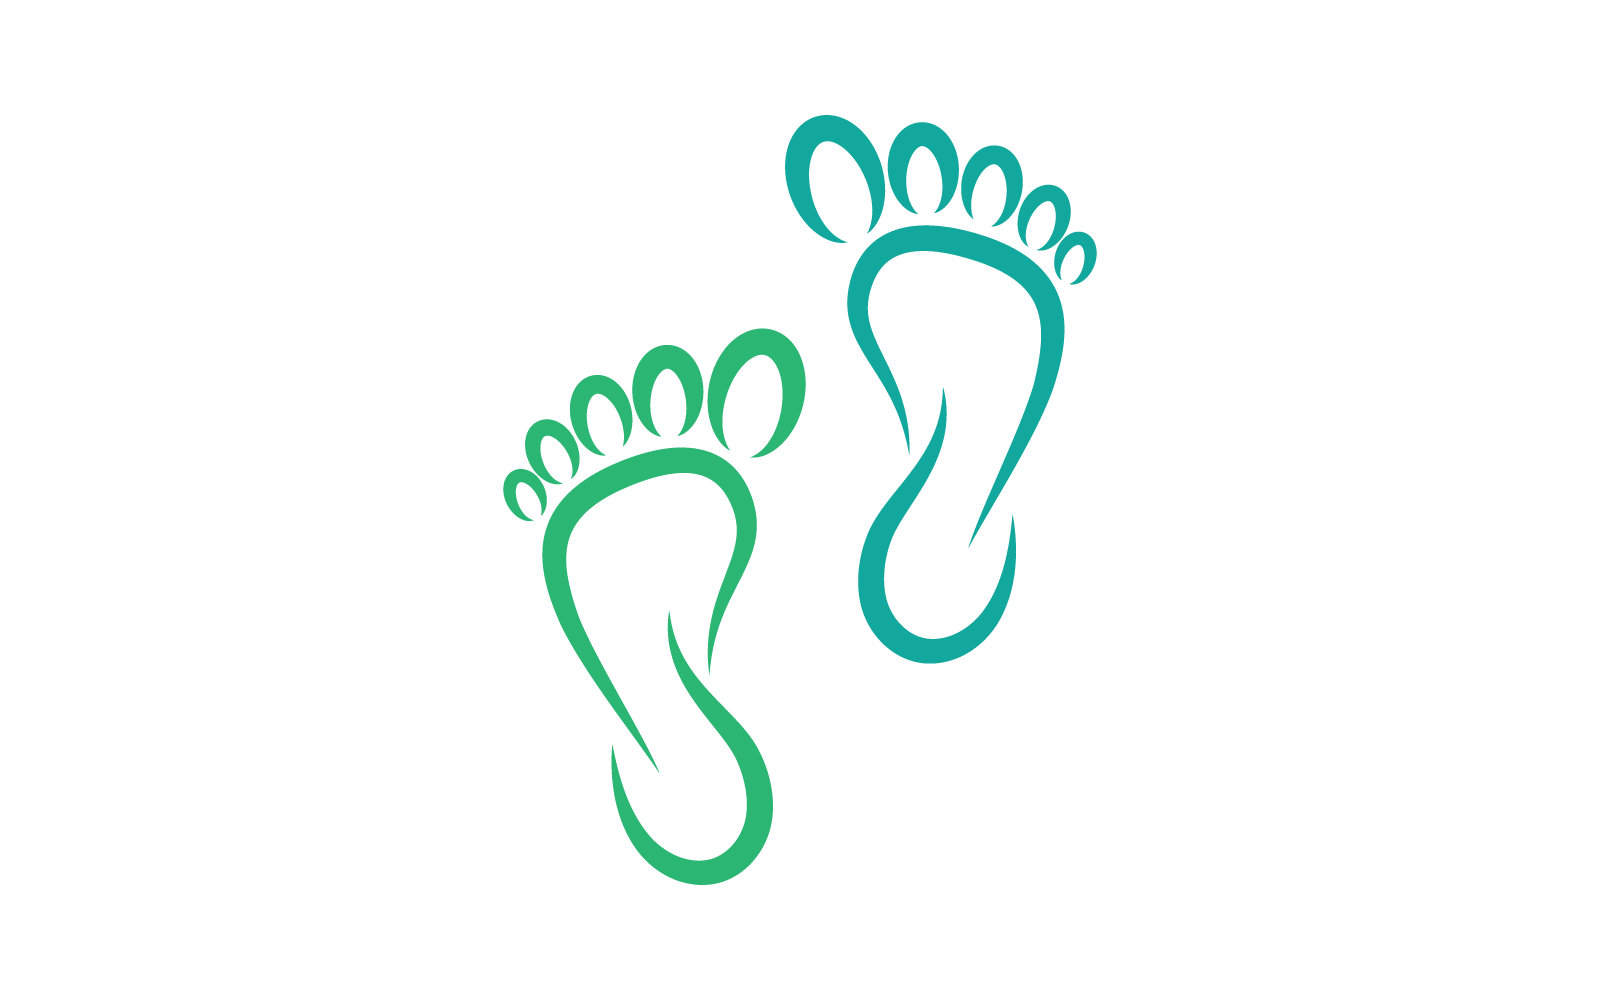 Foot care illustration logo vector design